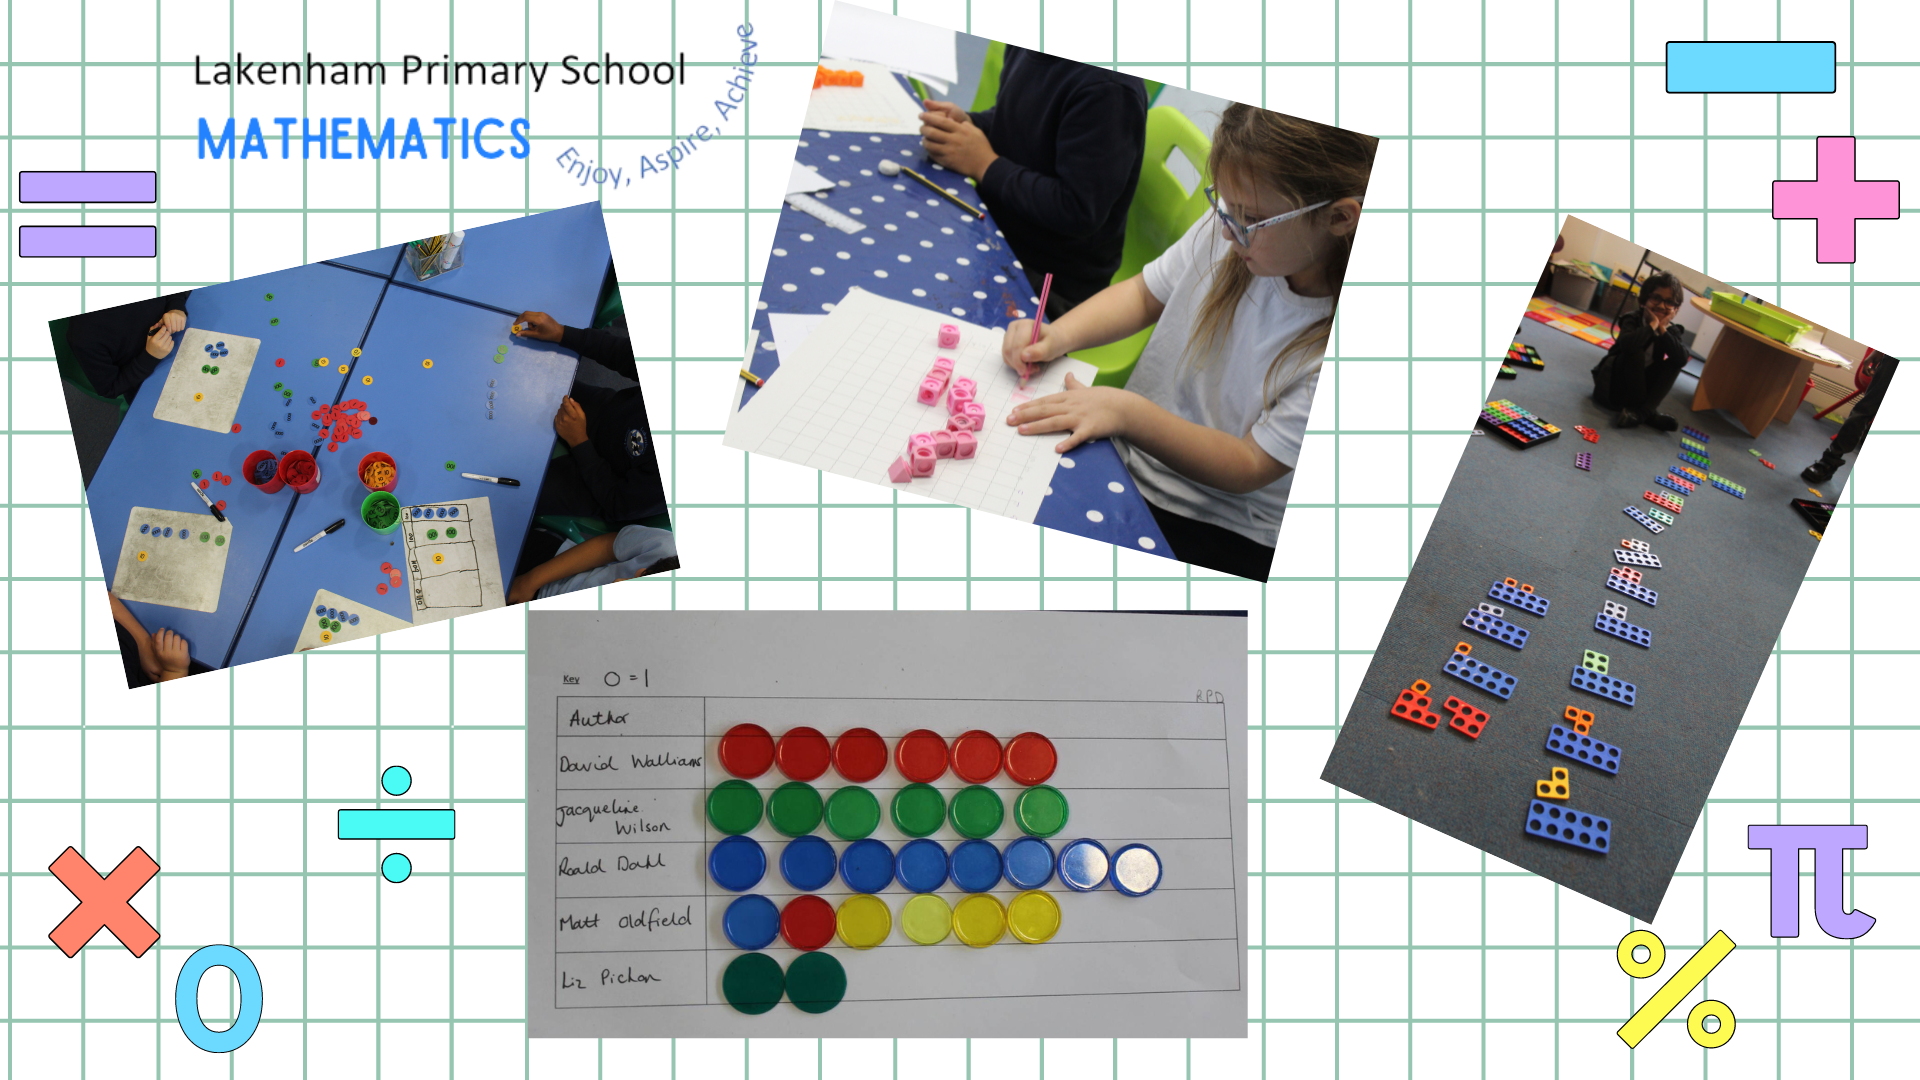 Lakenham Primary School Mathematics